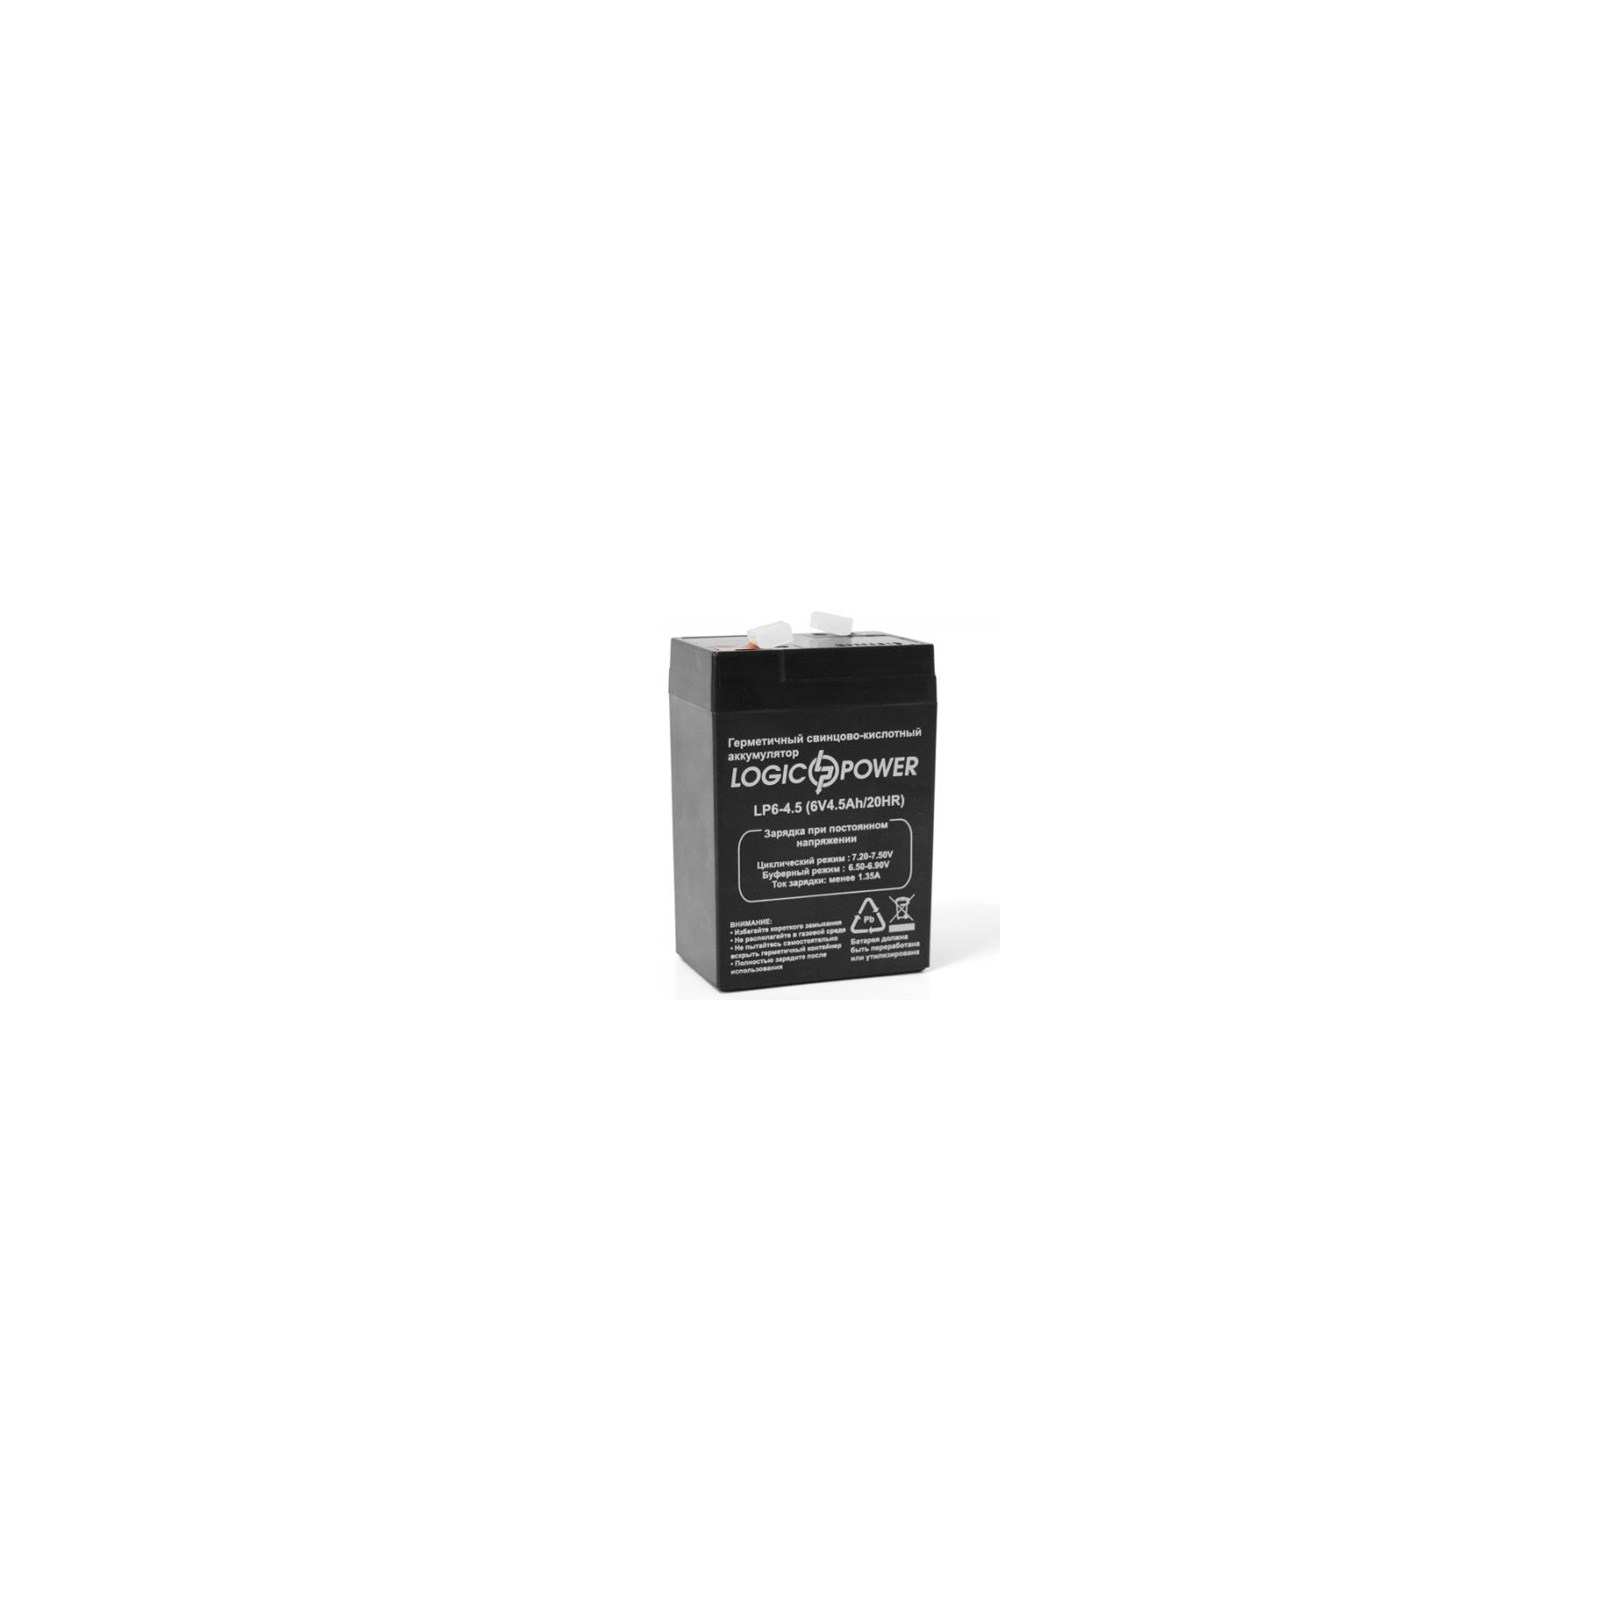 Батарея к ИБП LogicPower 6В 4.5 Ач (2569)